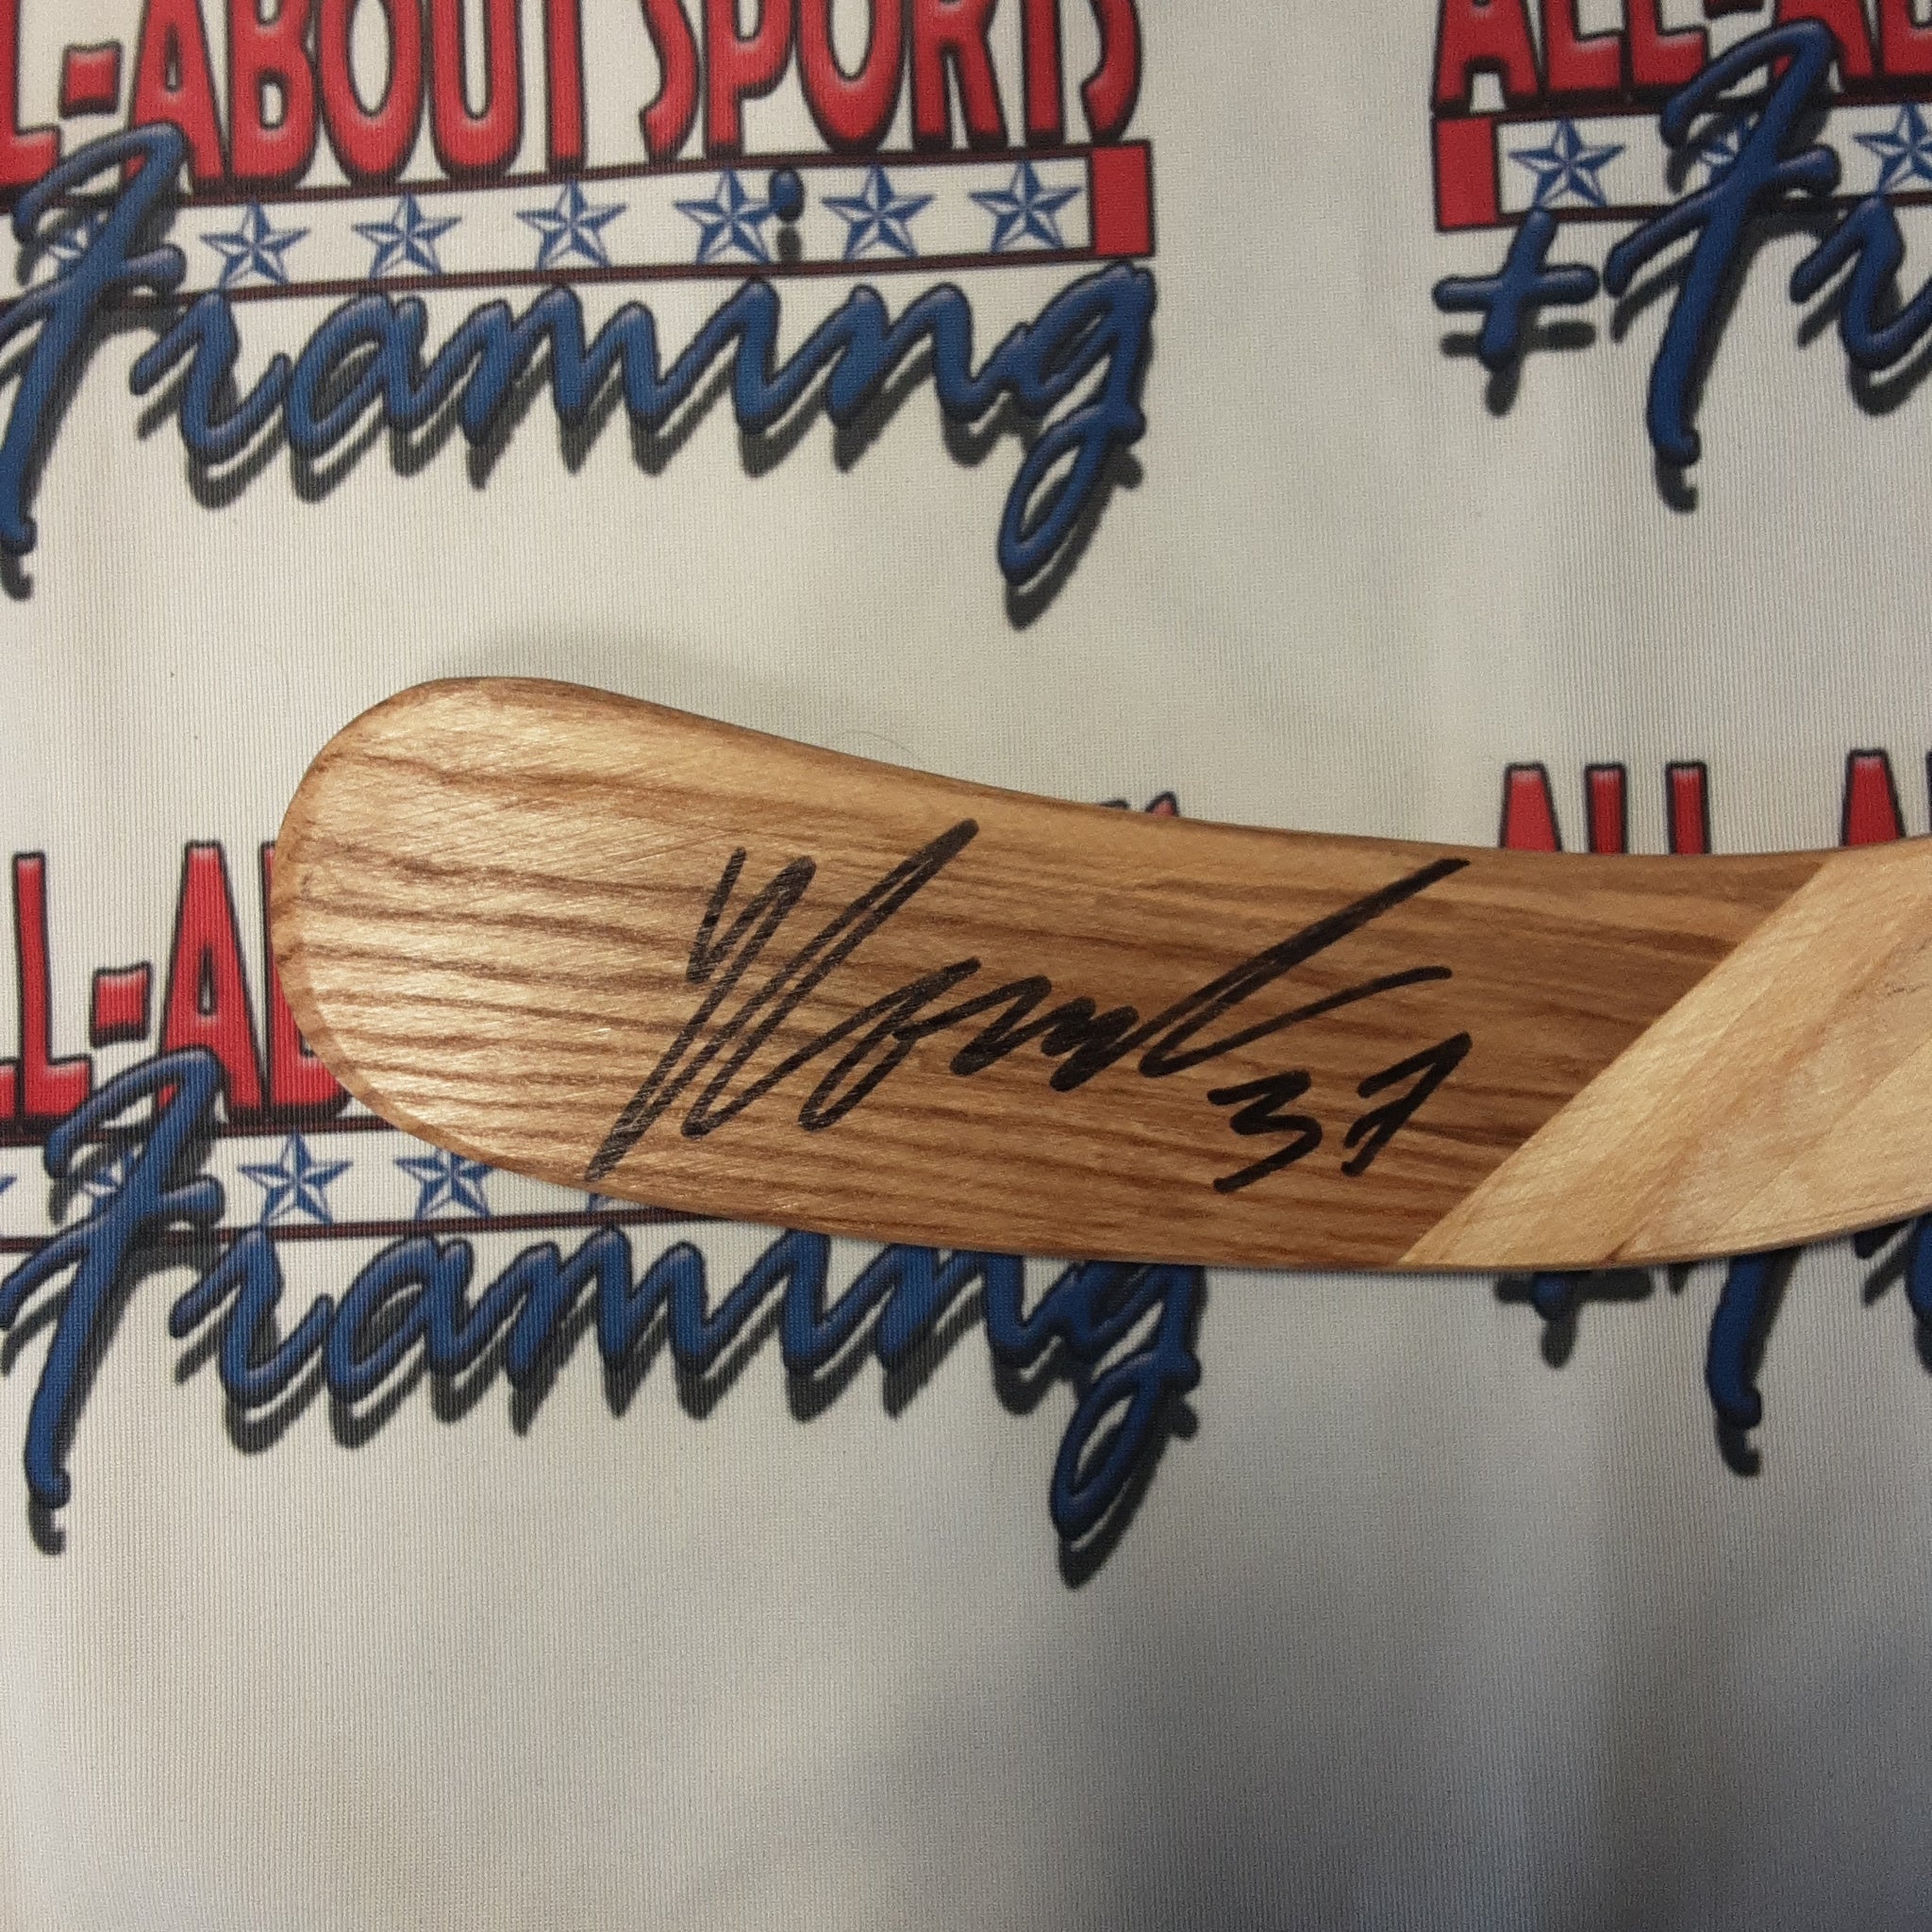 Yanni Gourde Authentic Signed Hockey Stick Autographed JSA.